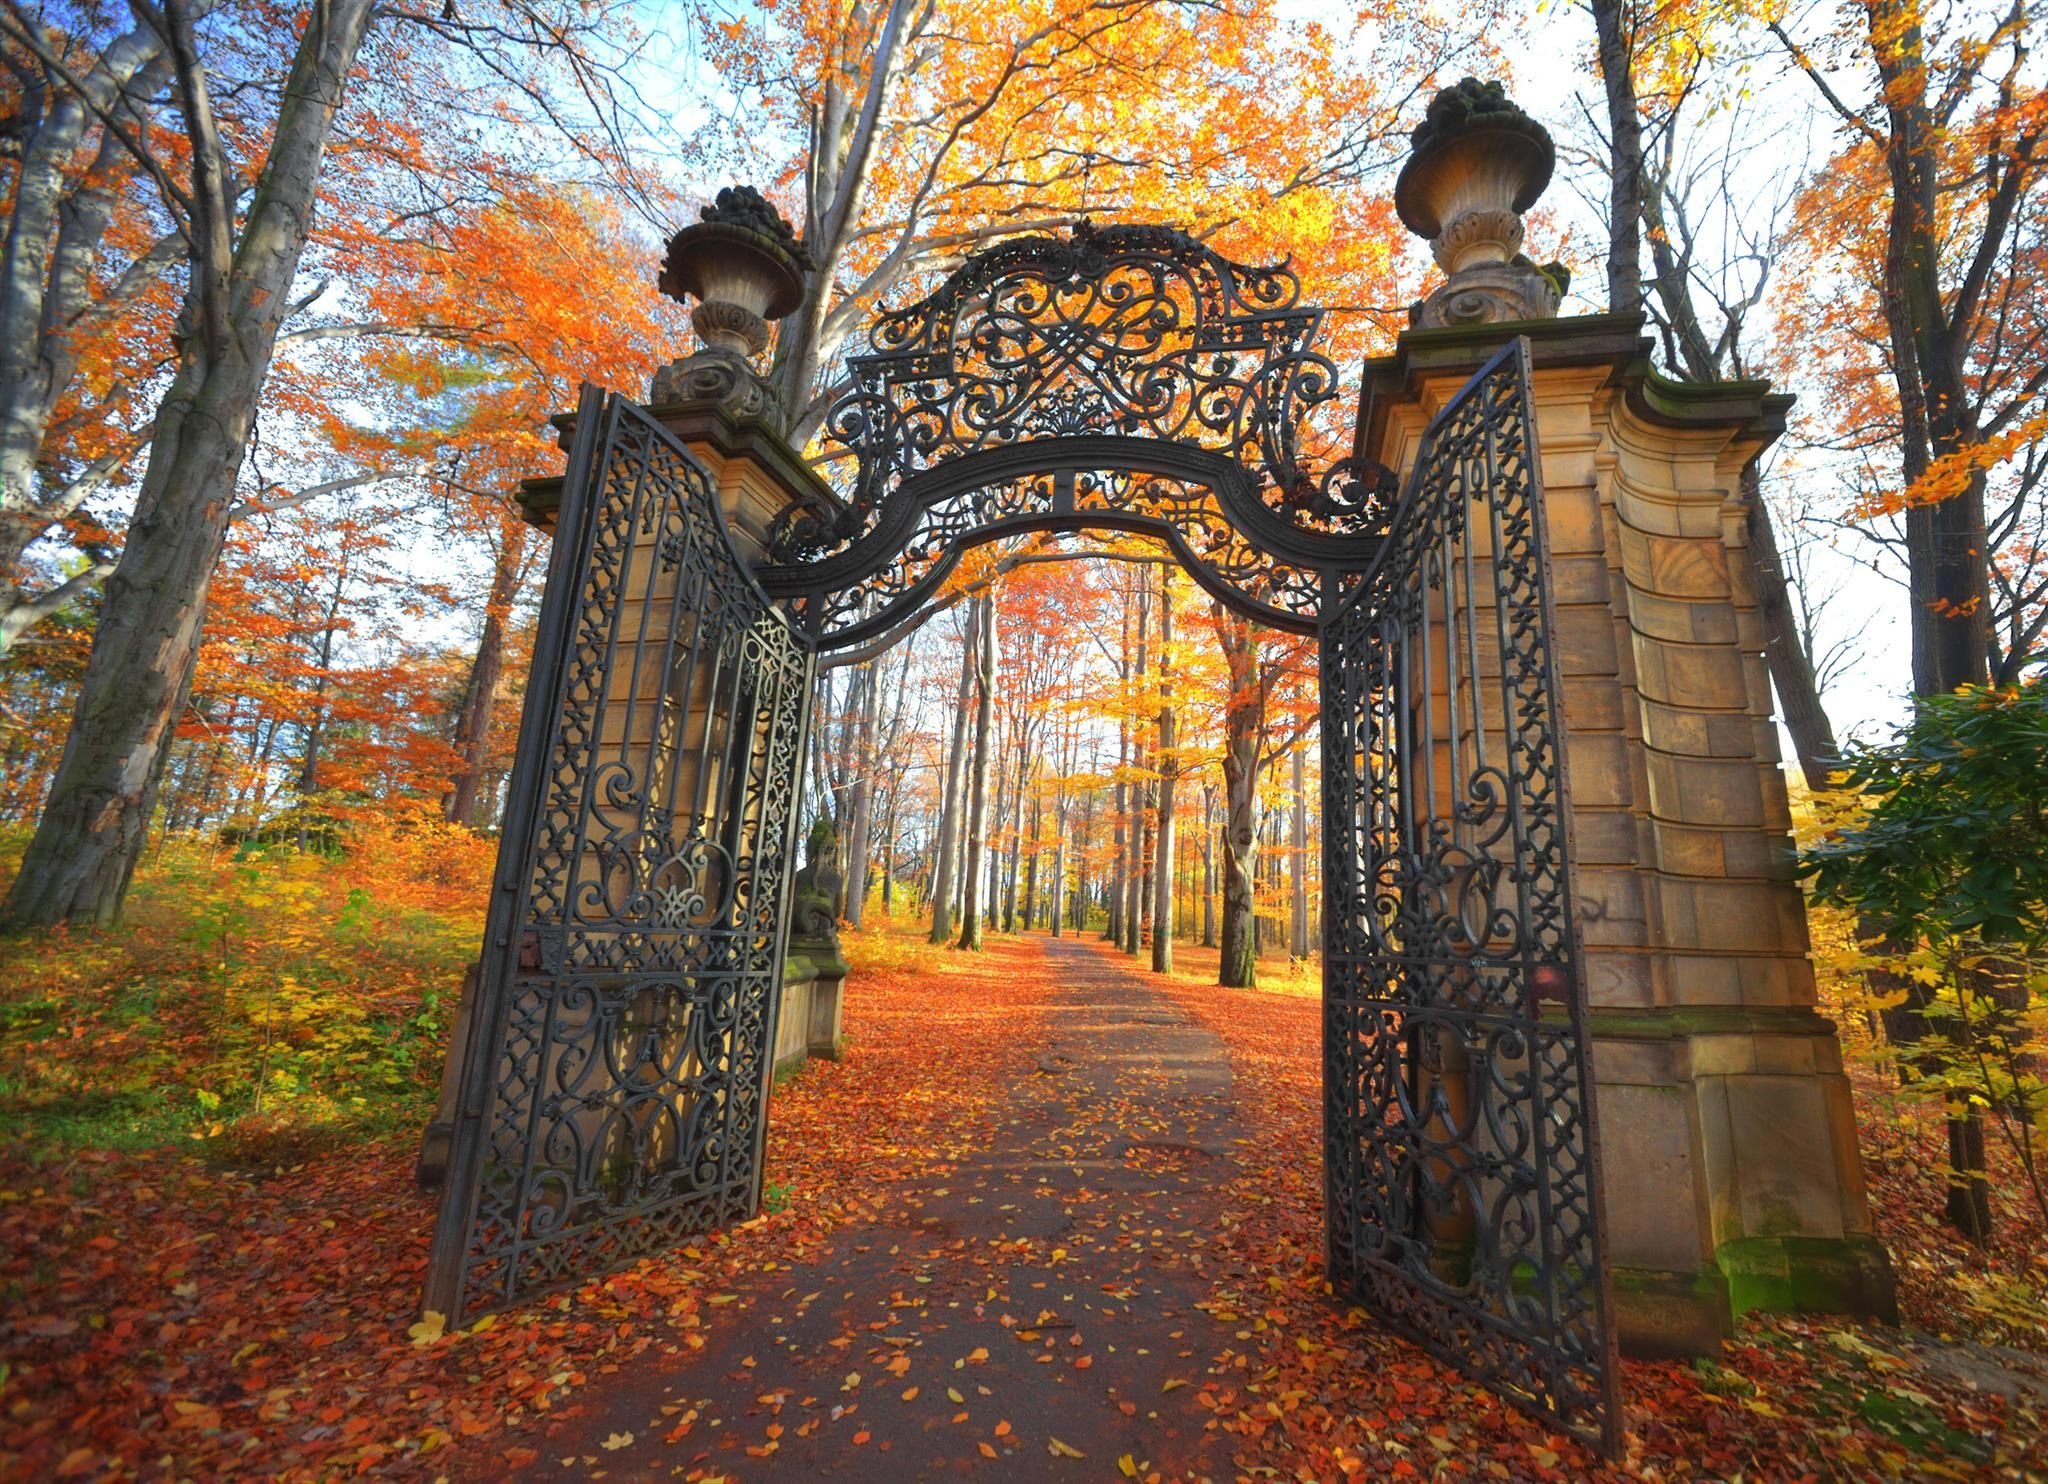 Гуляют ворота. Парк летний сад в Санкт-Петербурге. Входная арка в парк Готика. Ворота в парк. Ворота в осенний парк.